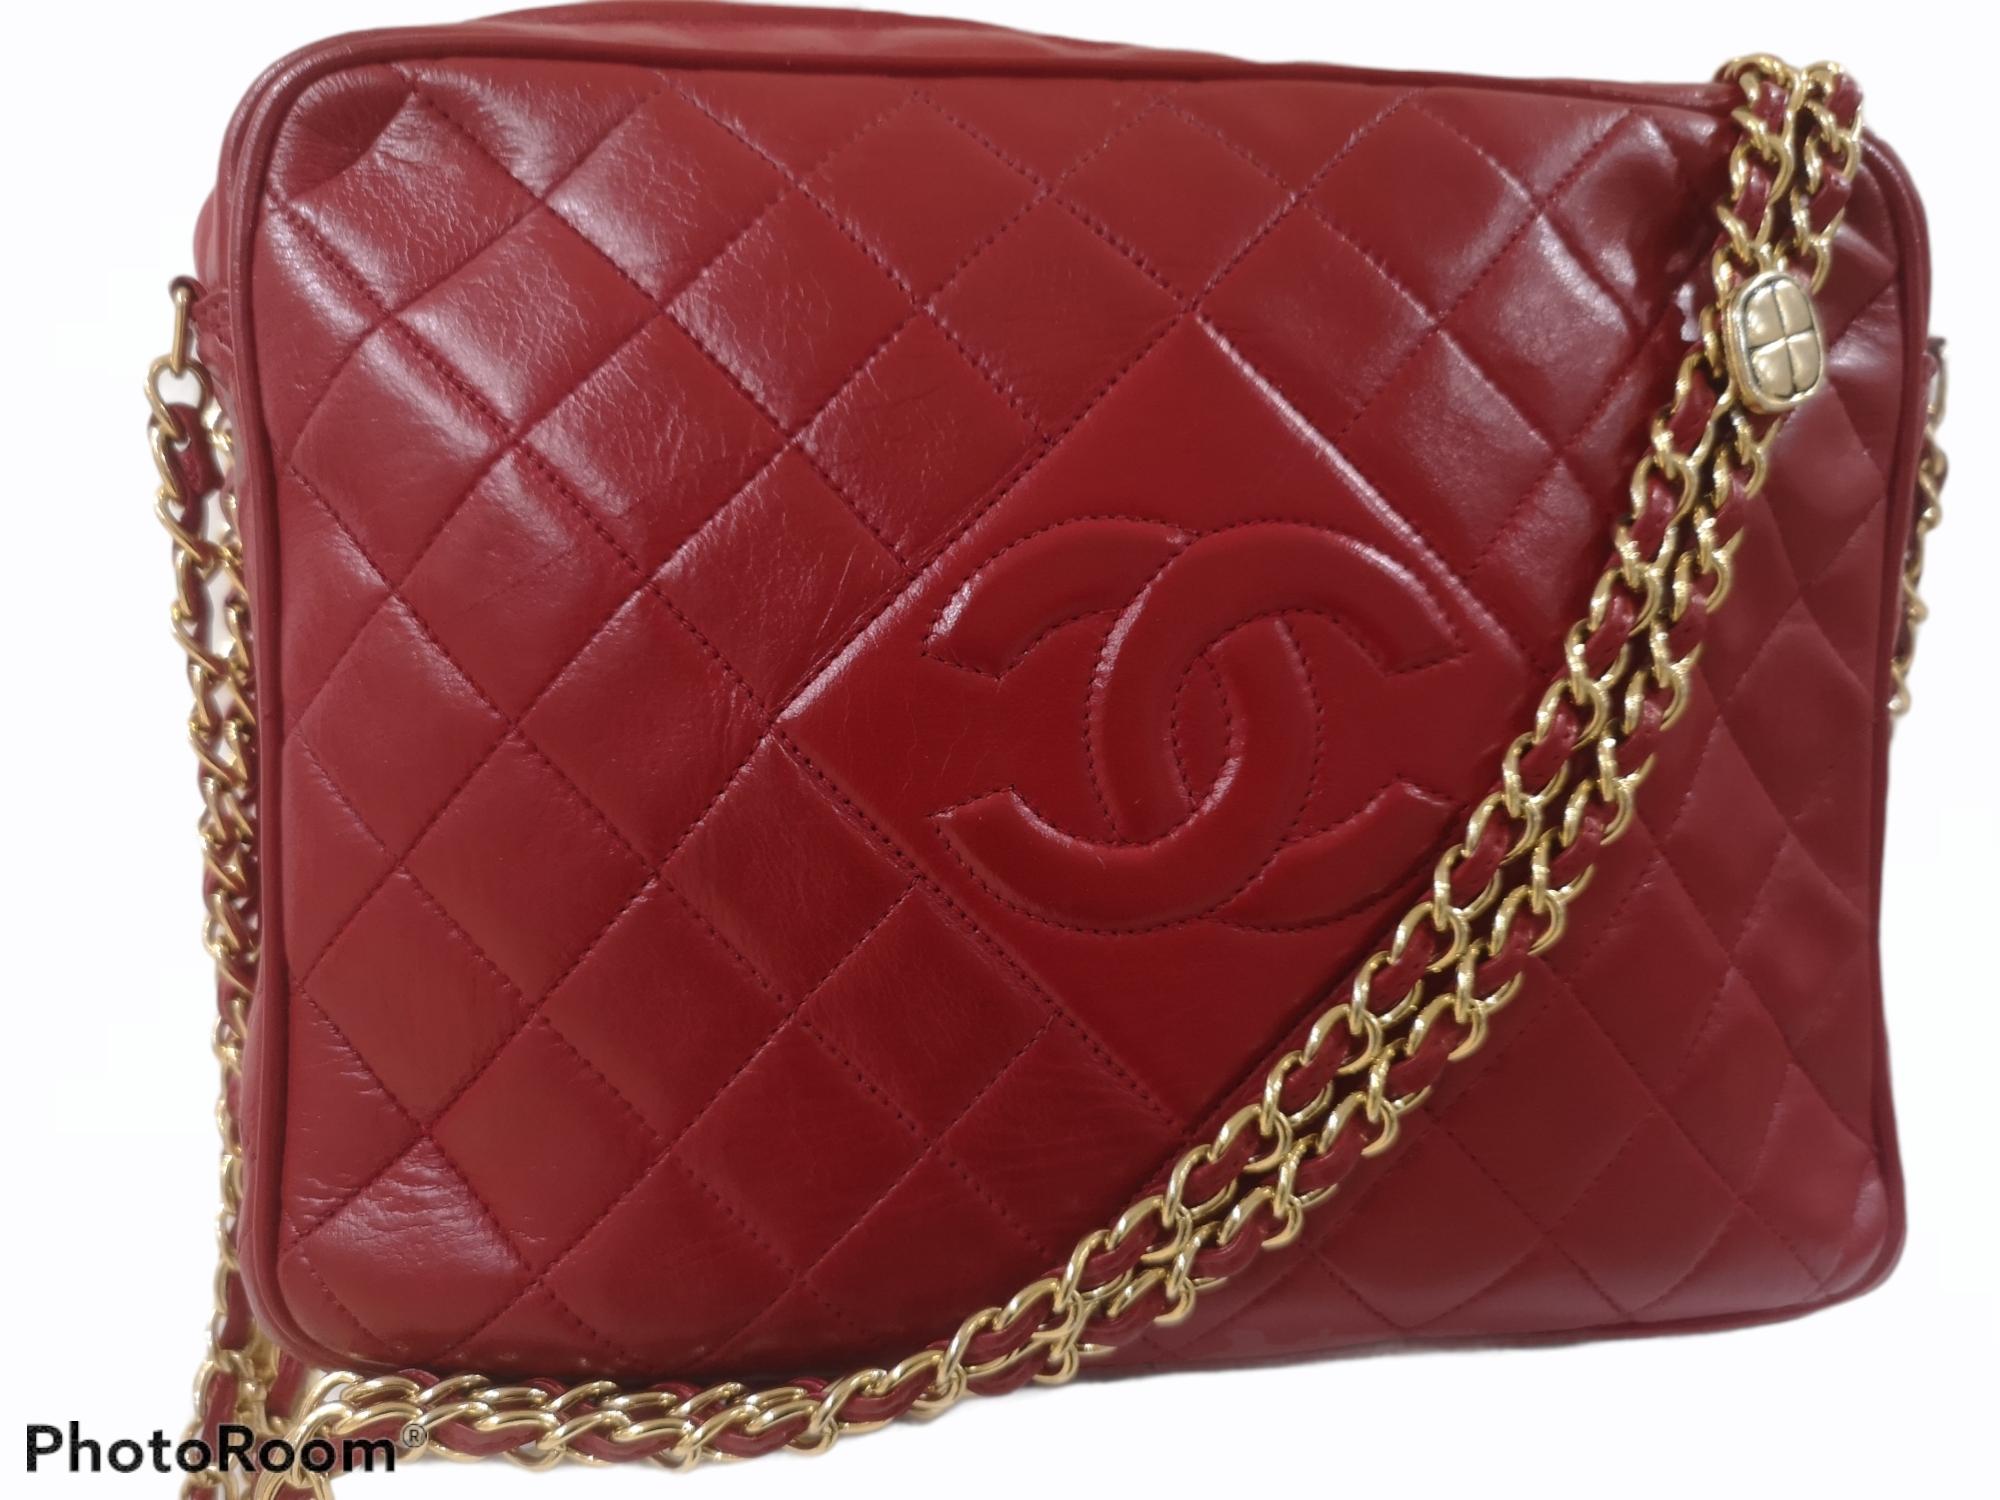 Chanel Camera bag red leather gold tone chain shoulder bag 1